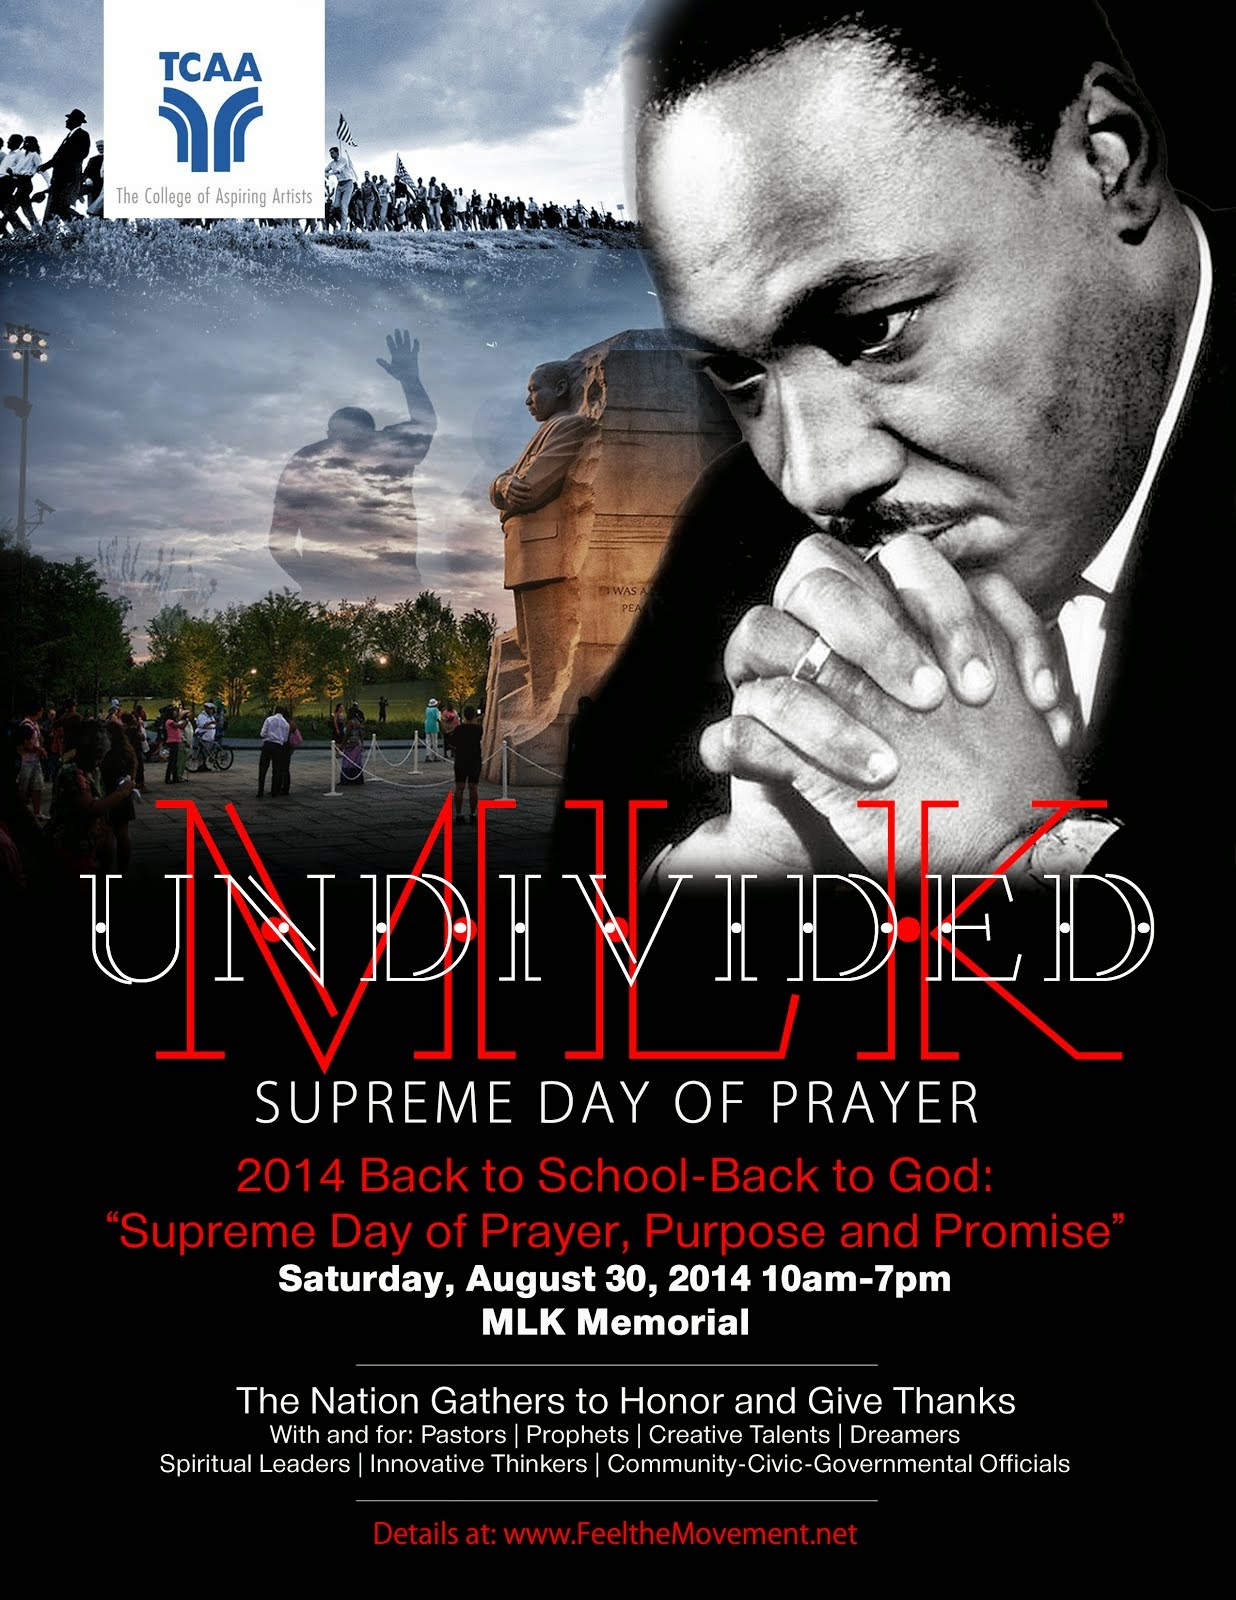 Supreme Day of Prayer at MLK Memorial